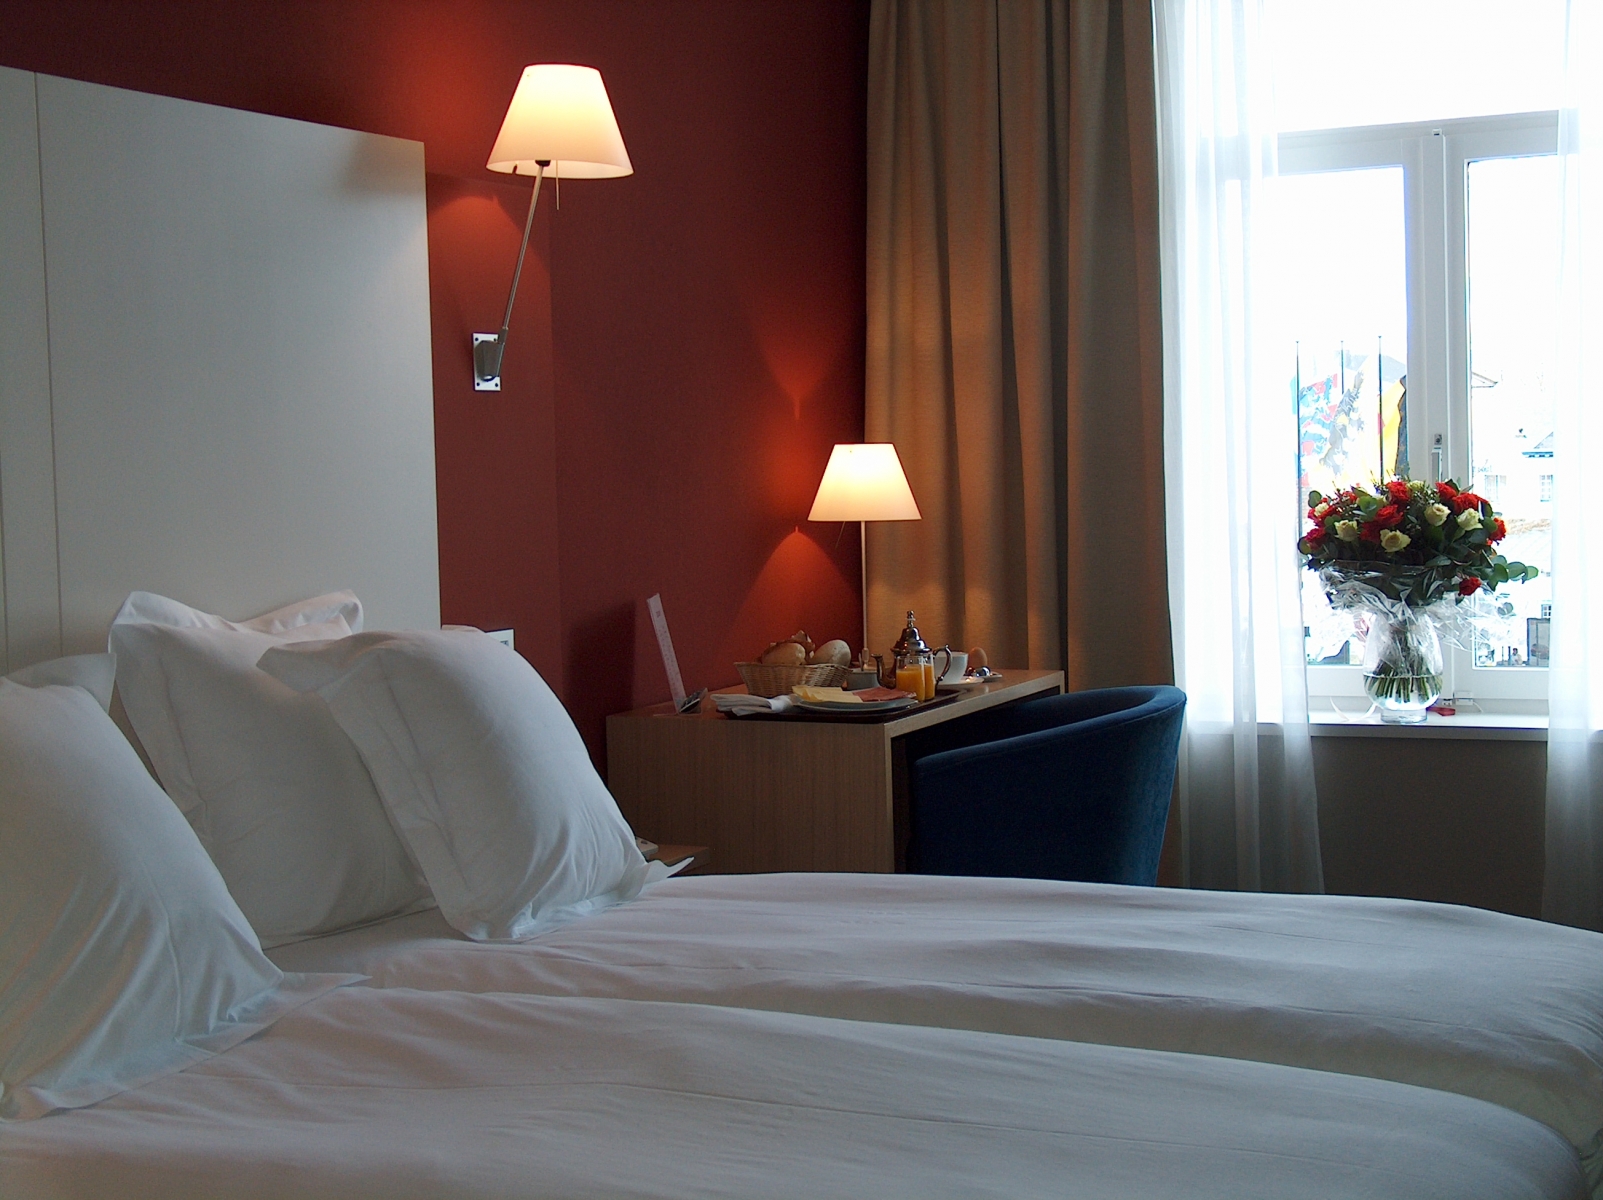 Hotel 't Zand <br/>76.67 ew <br/> <a href='http://vakantieoplossing.nl/outpage/?id=7f56f0eebb84357ad27d970fbd31f668' target='_blank'>View Details</a>